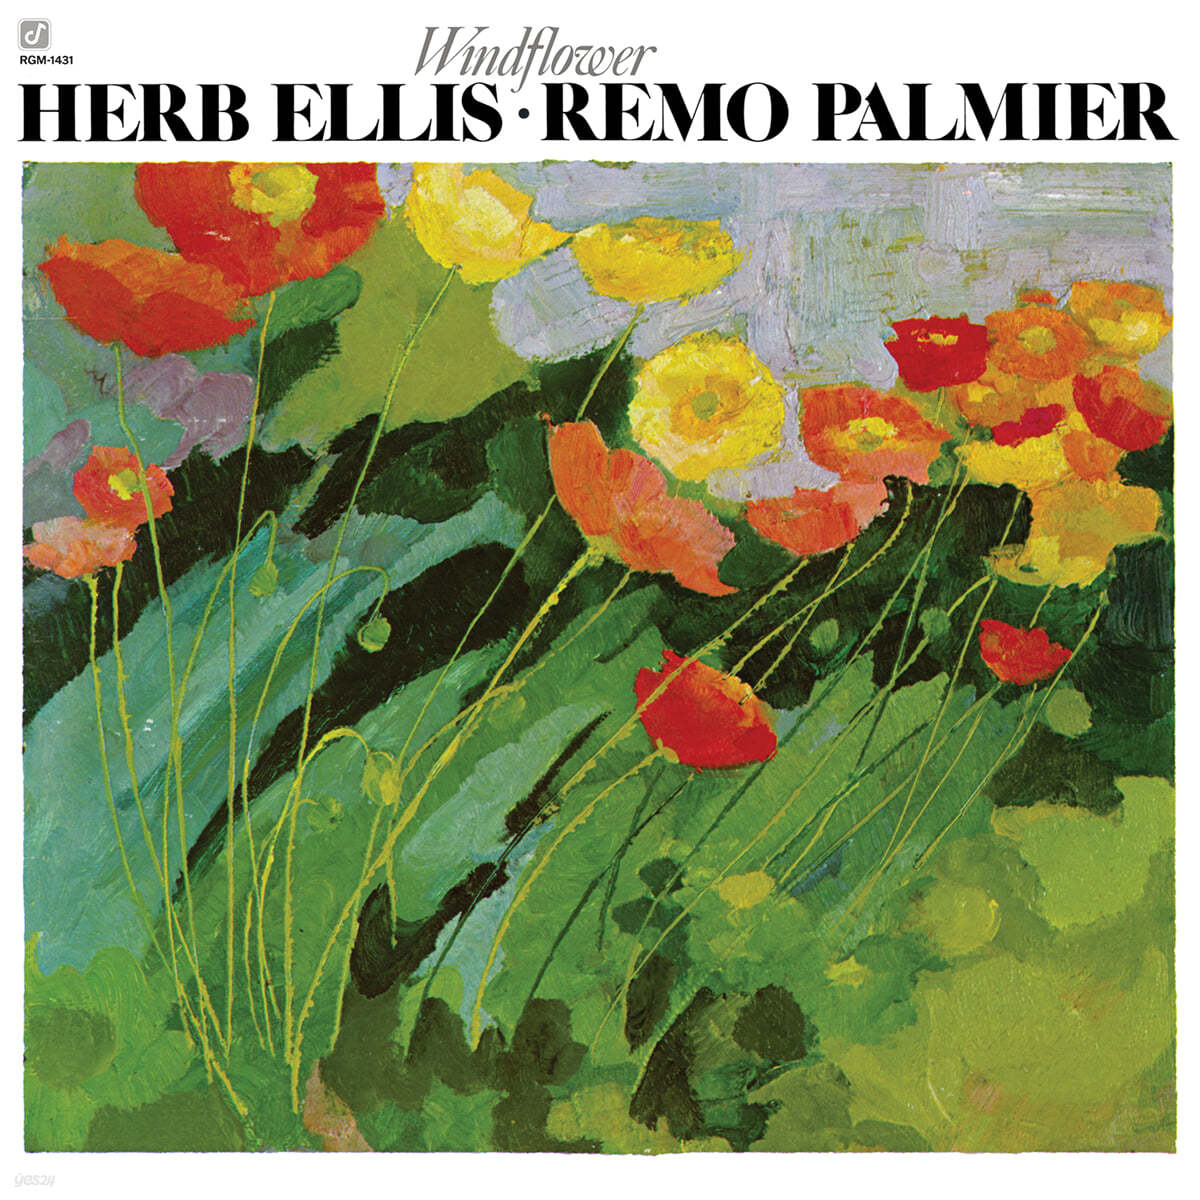 Herb Ellis / Remo Palmier (허브 엘리스 / 레모 팔미에) - Windflower [에메랄드 그린 컬러 LP]